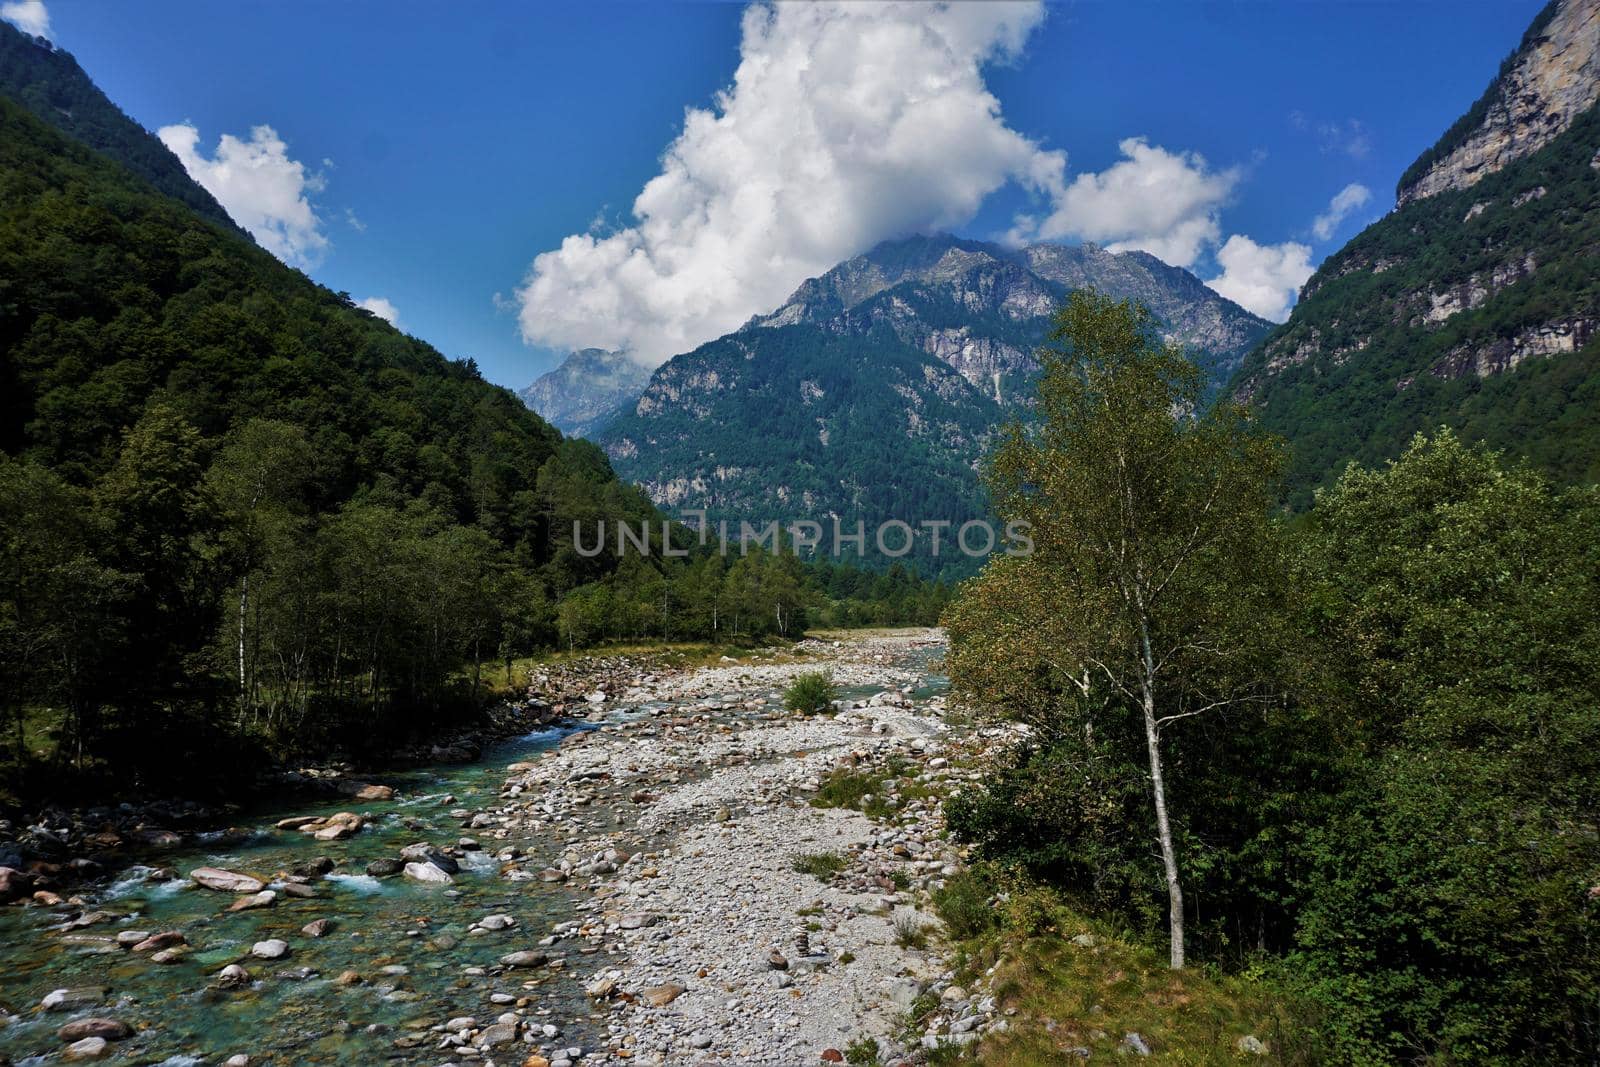 Typical landscape in the Valle Verzasca, Ticino, Switzerland